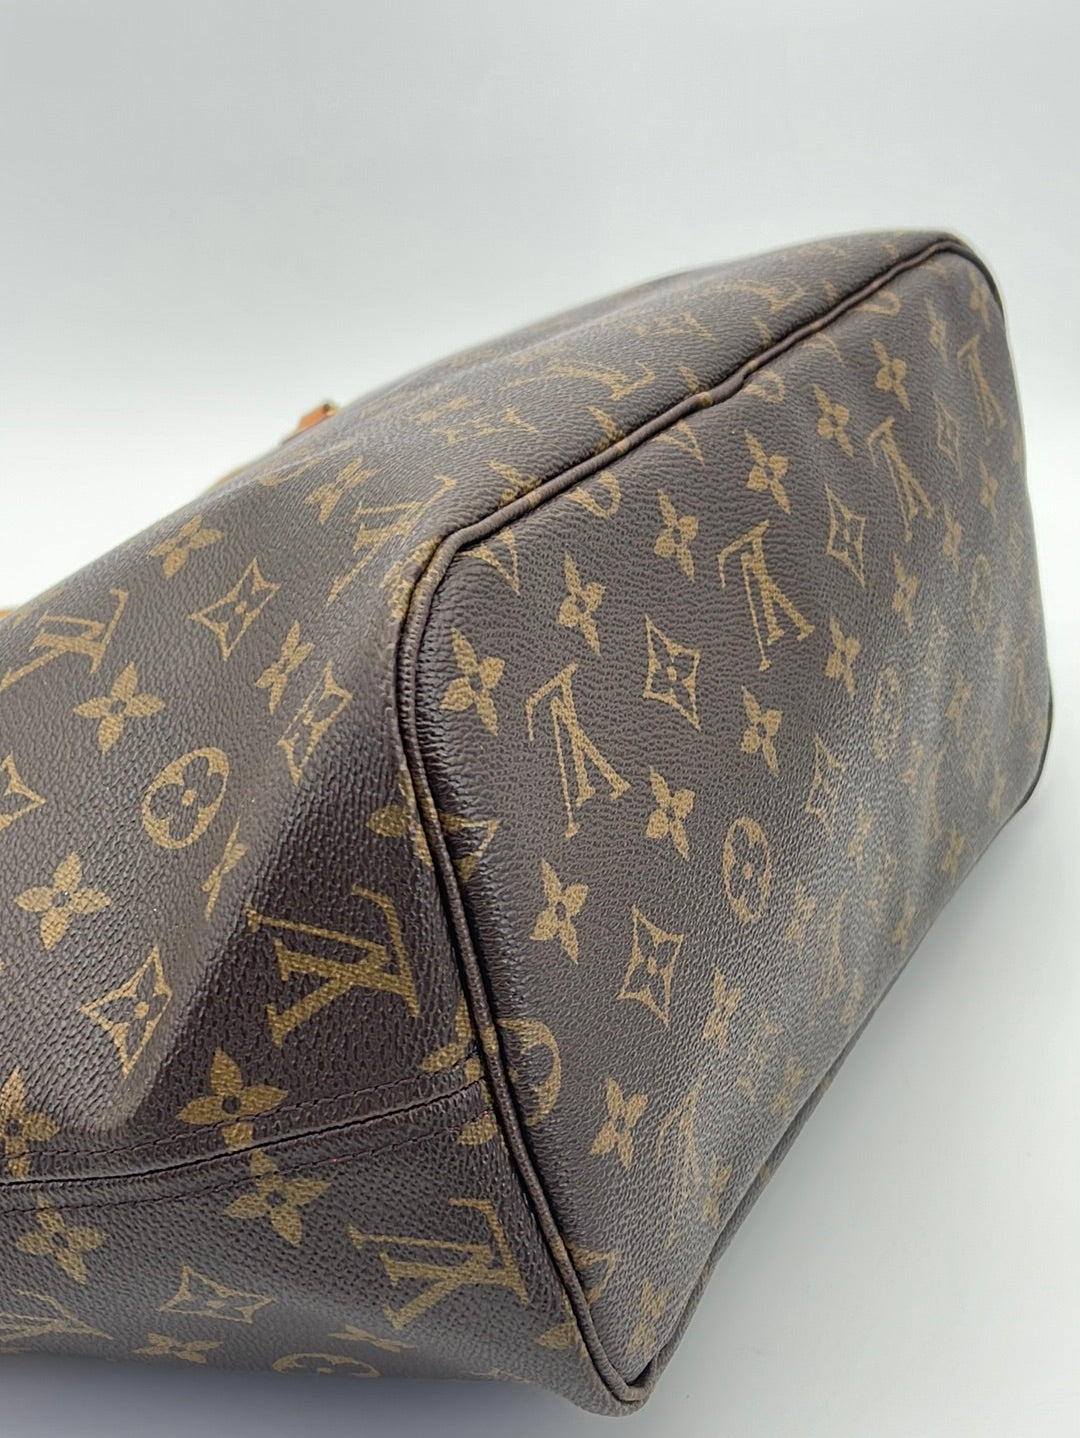 Hot Louis Vuitton NEVERFULL Medium Bag large size LV ladies tote bag M41177